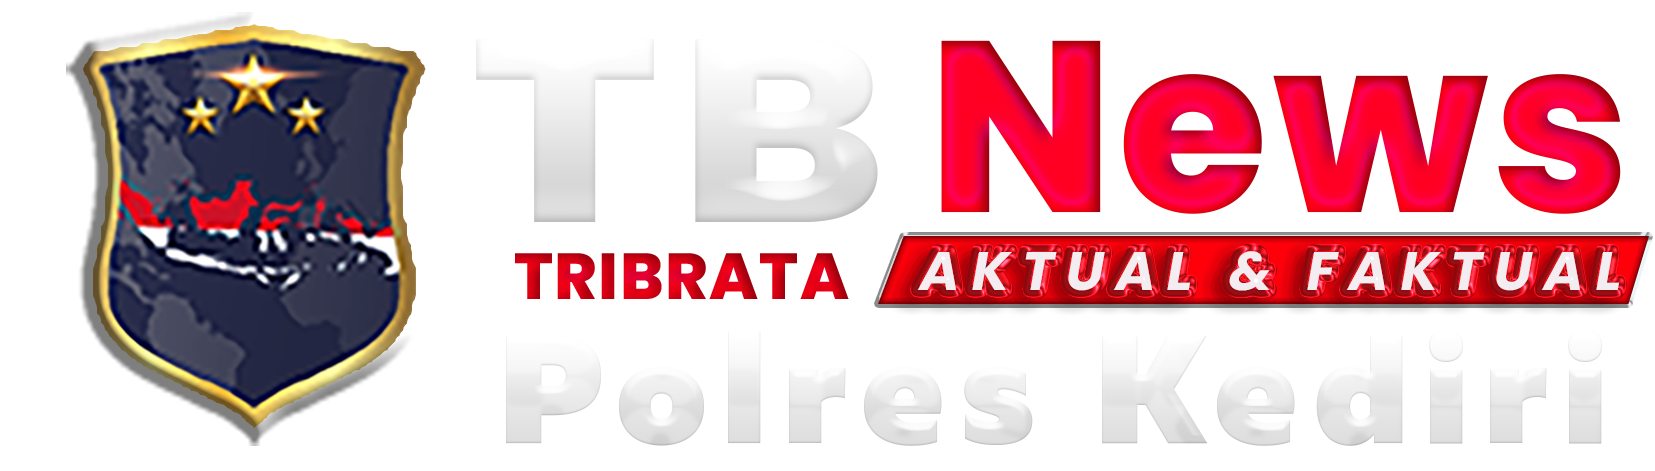 Tribratanews Polres Kediri